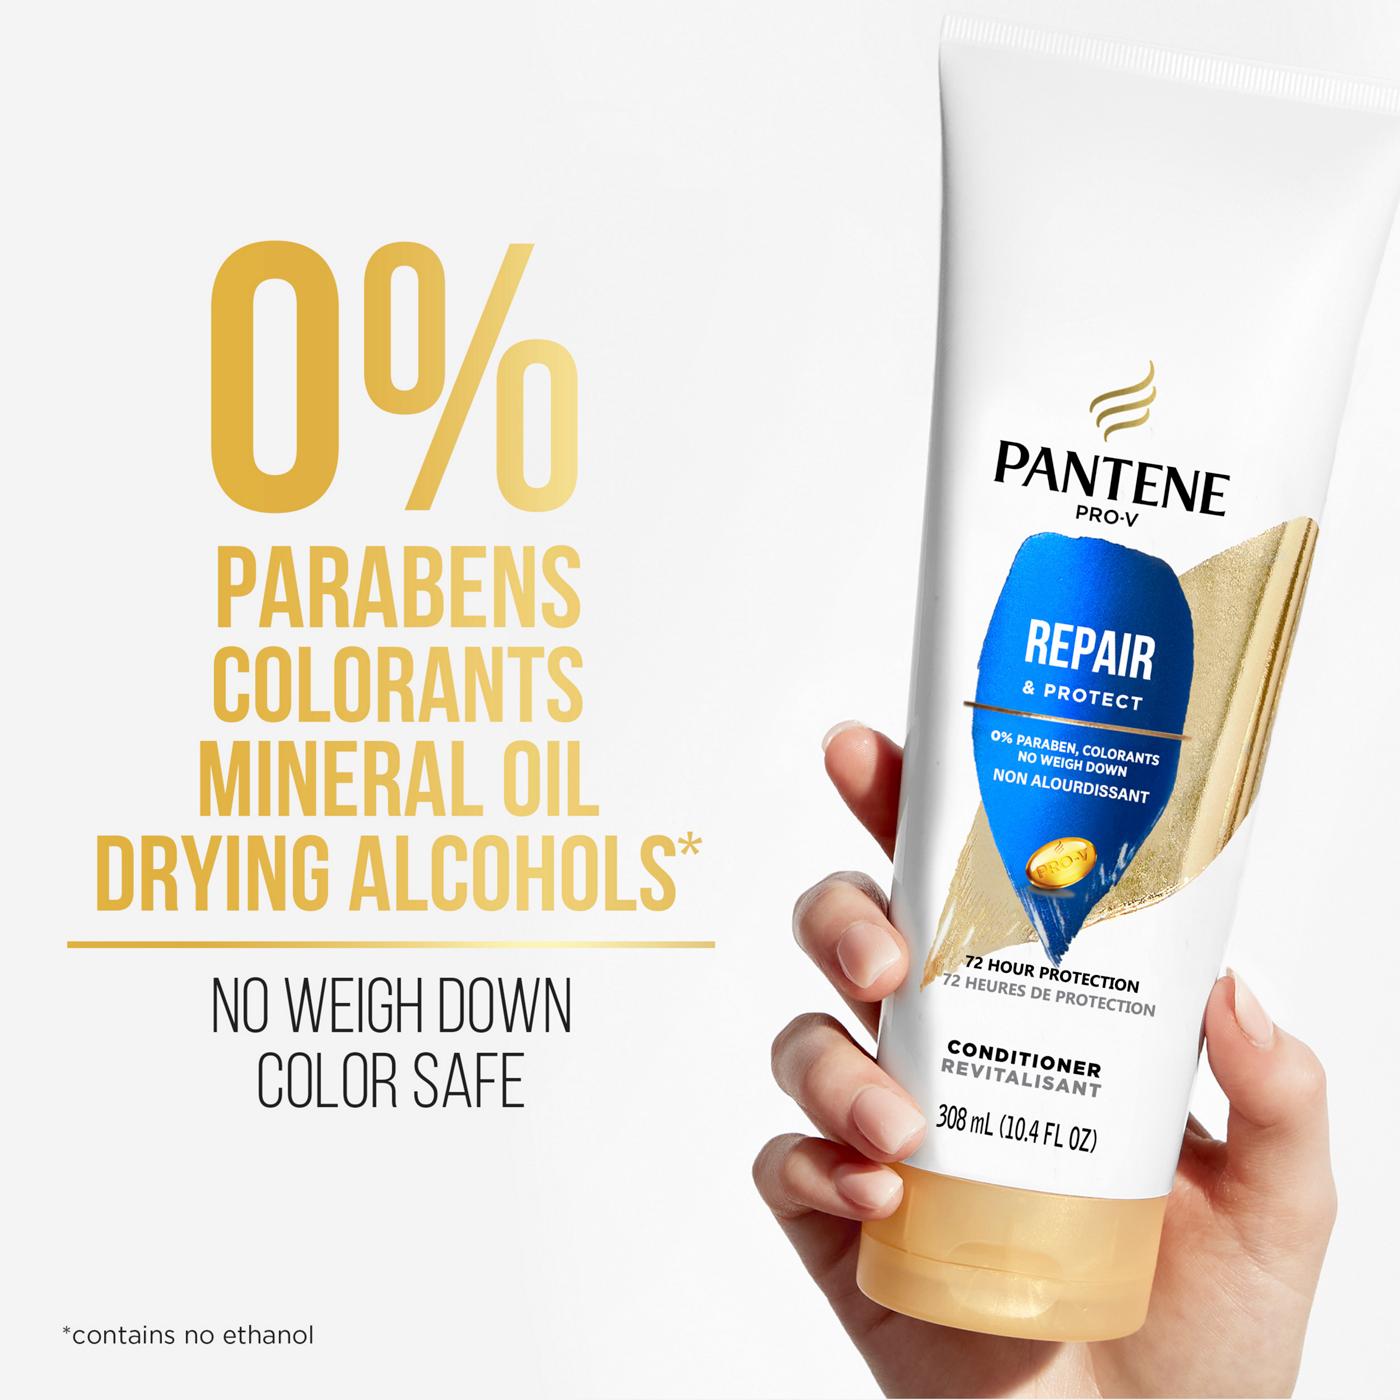 Pantene Pro-V Repair & Protect Shampoo + Conditioner; image 11 of 11